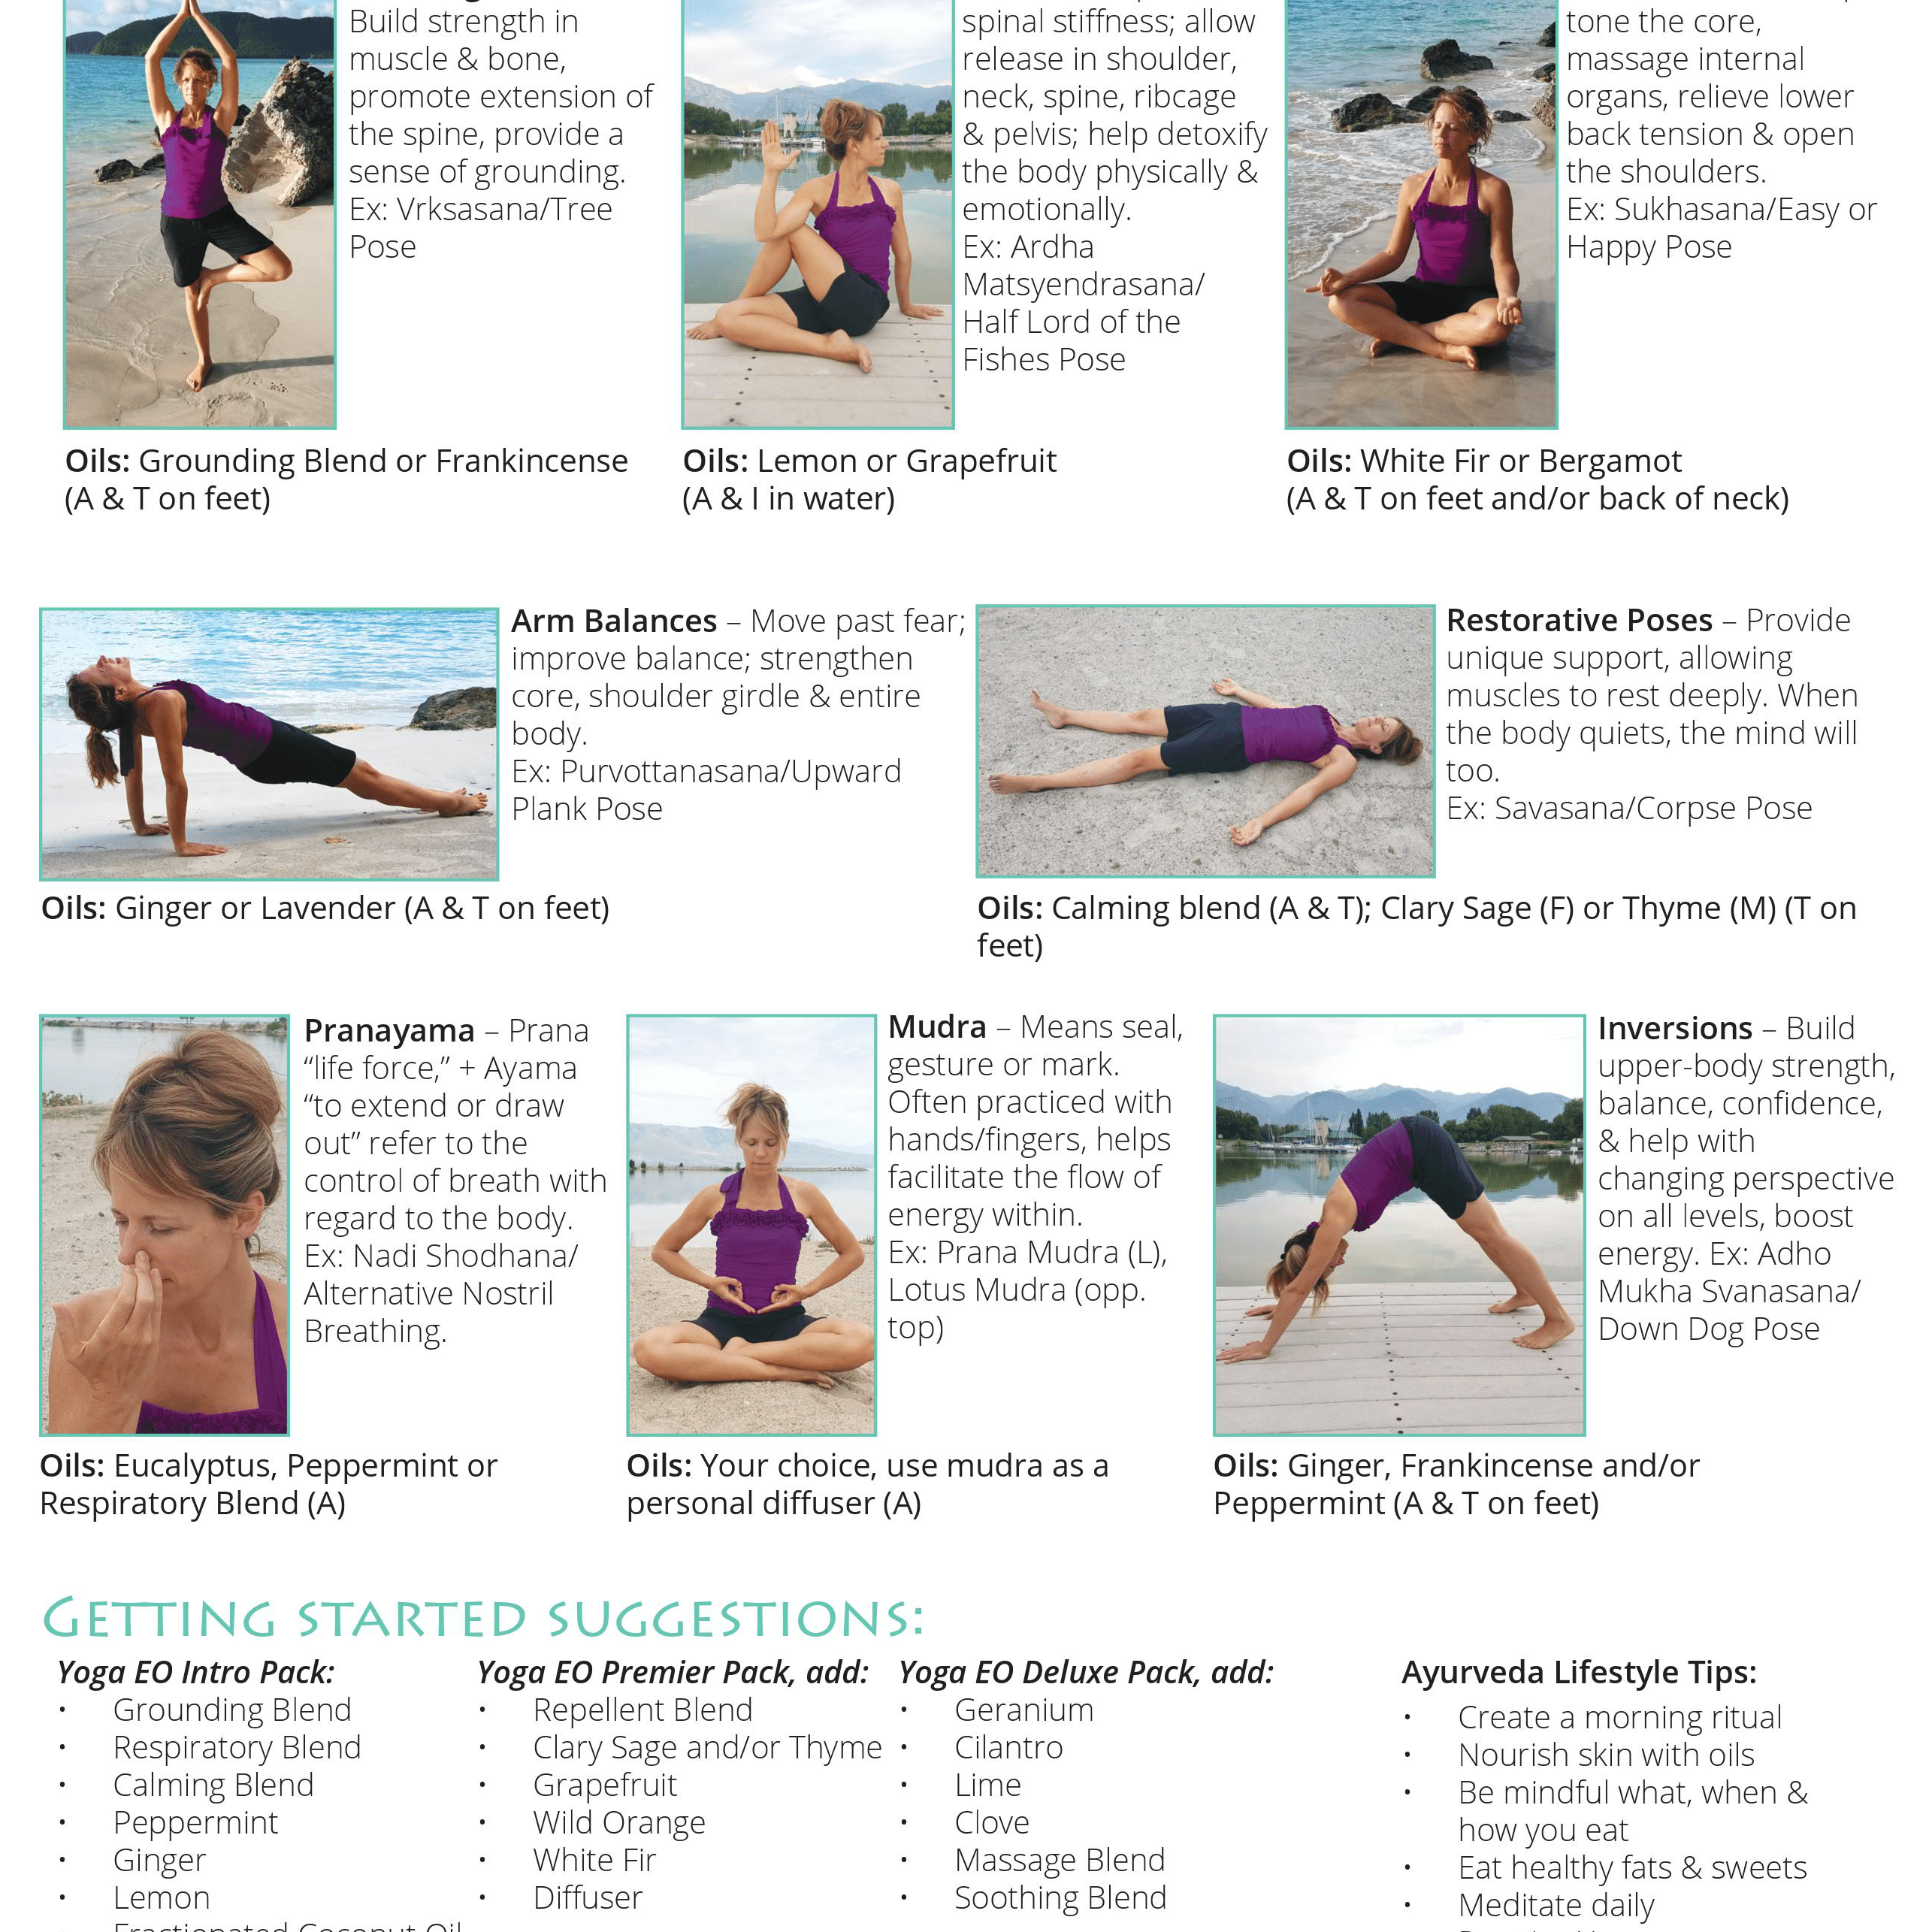 Essential Yoga Tear Pad - Oil Life